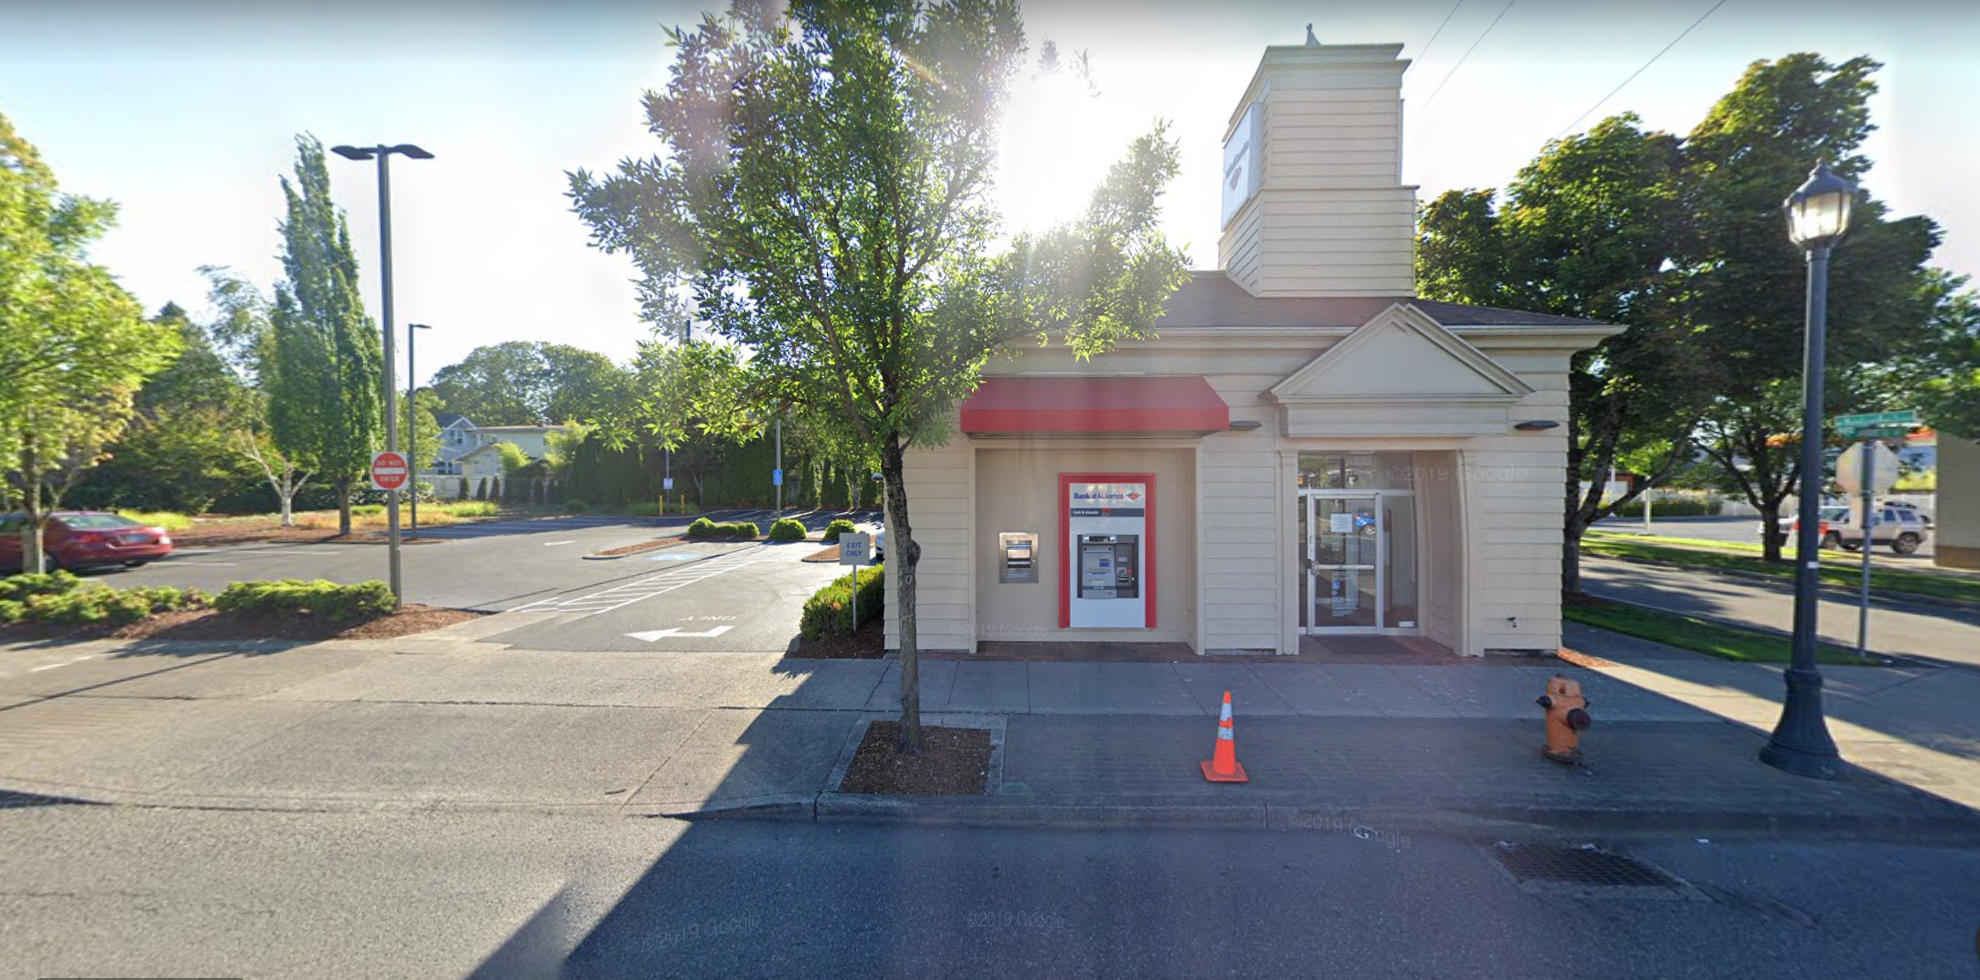 Bank of America financial center with drive-thru ATM | 5775 NE Martin L King Jr Blvd, Portland, OR 97211